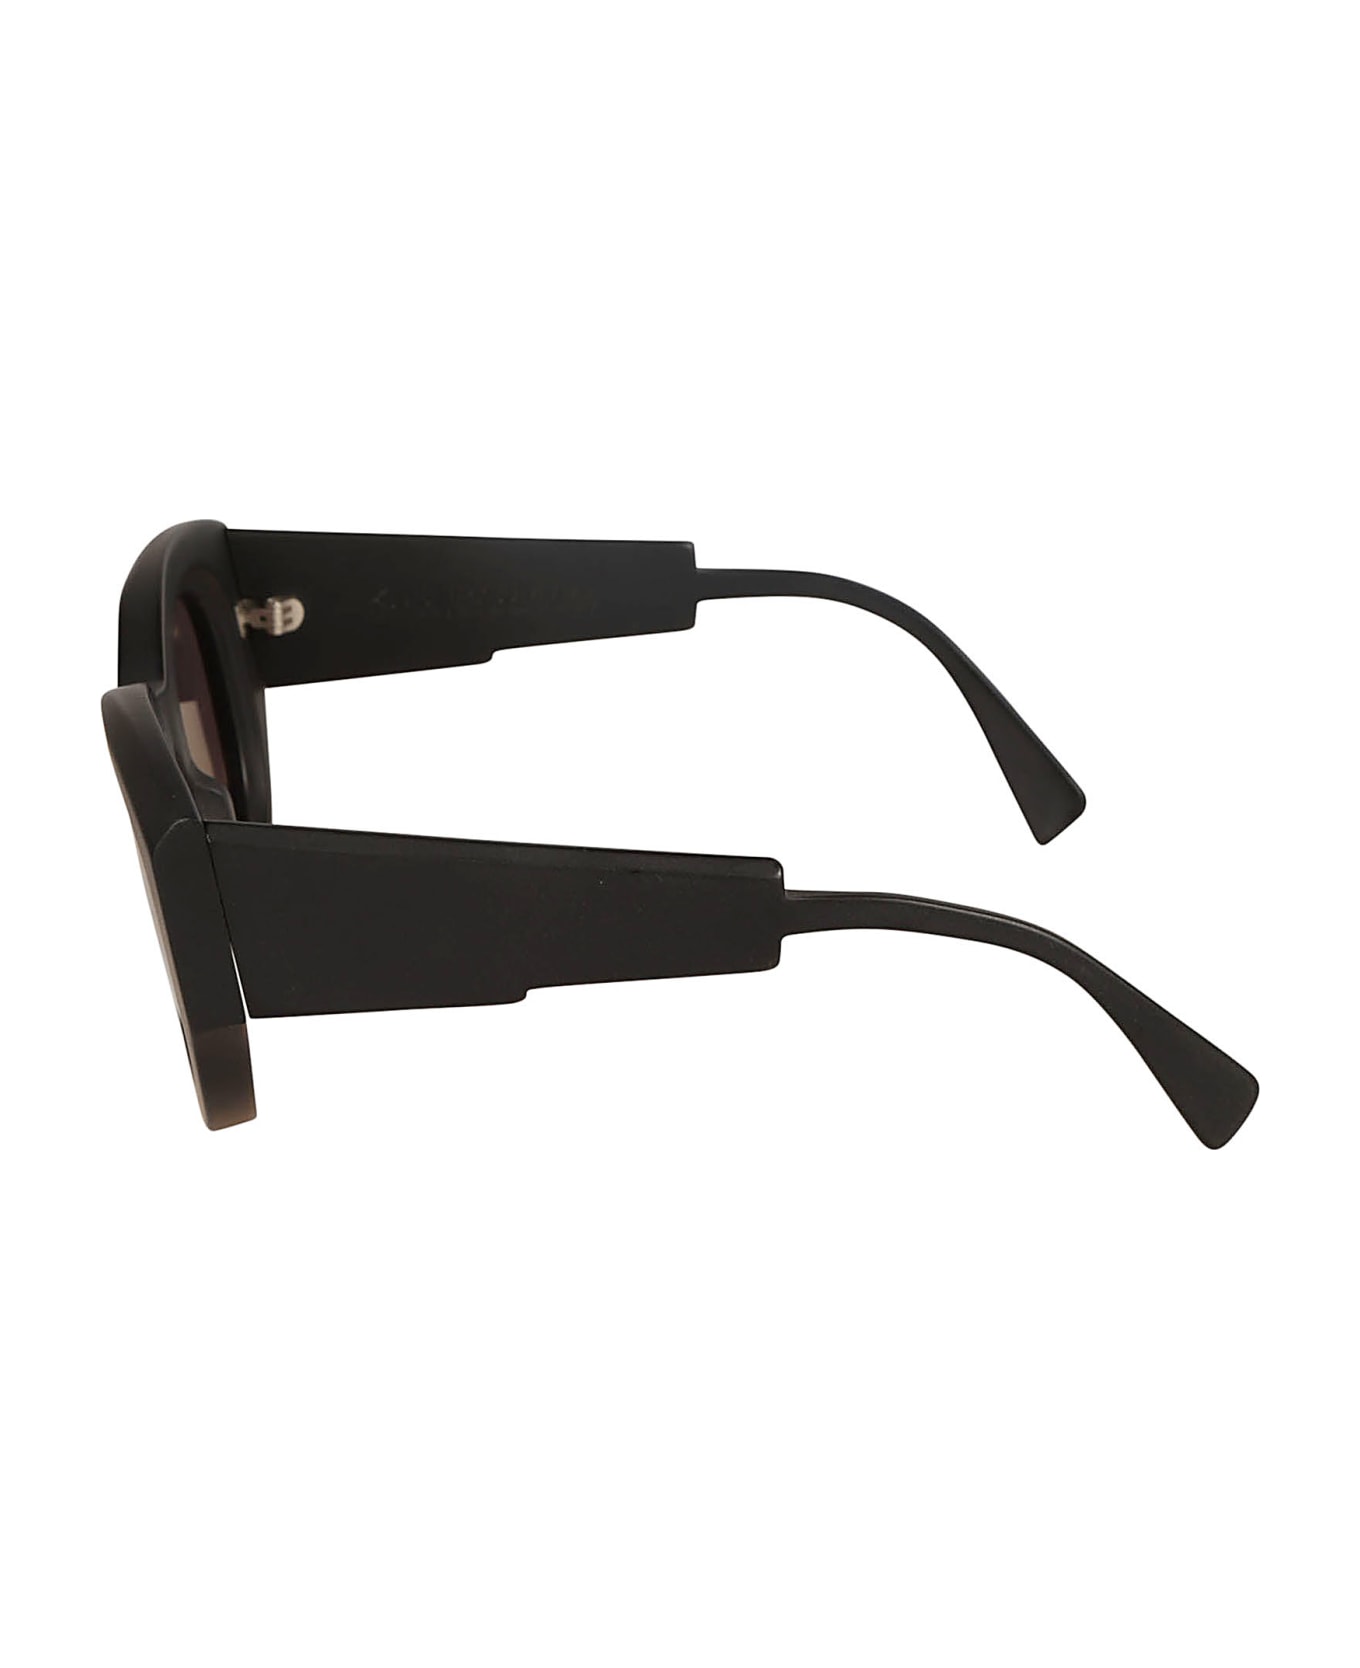 Kuboraum B5 Sunglasses Sunglasses - black